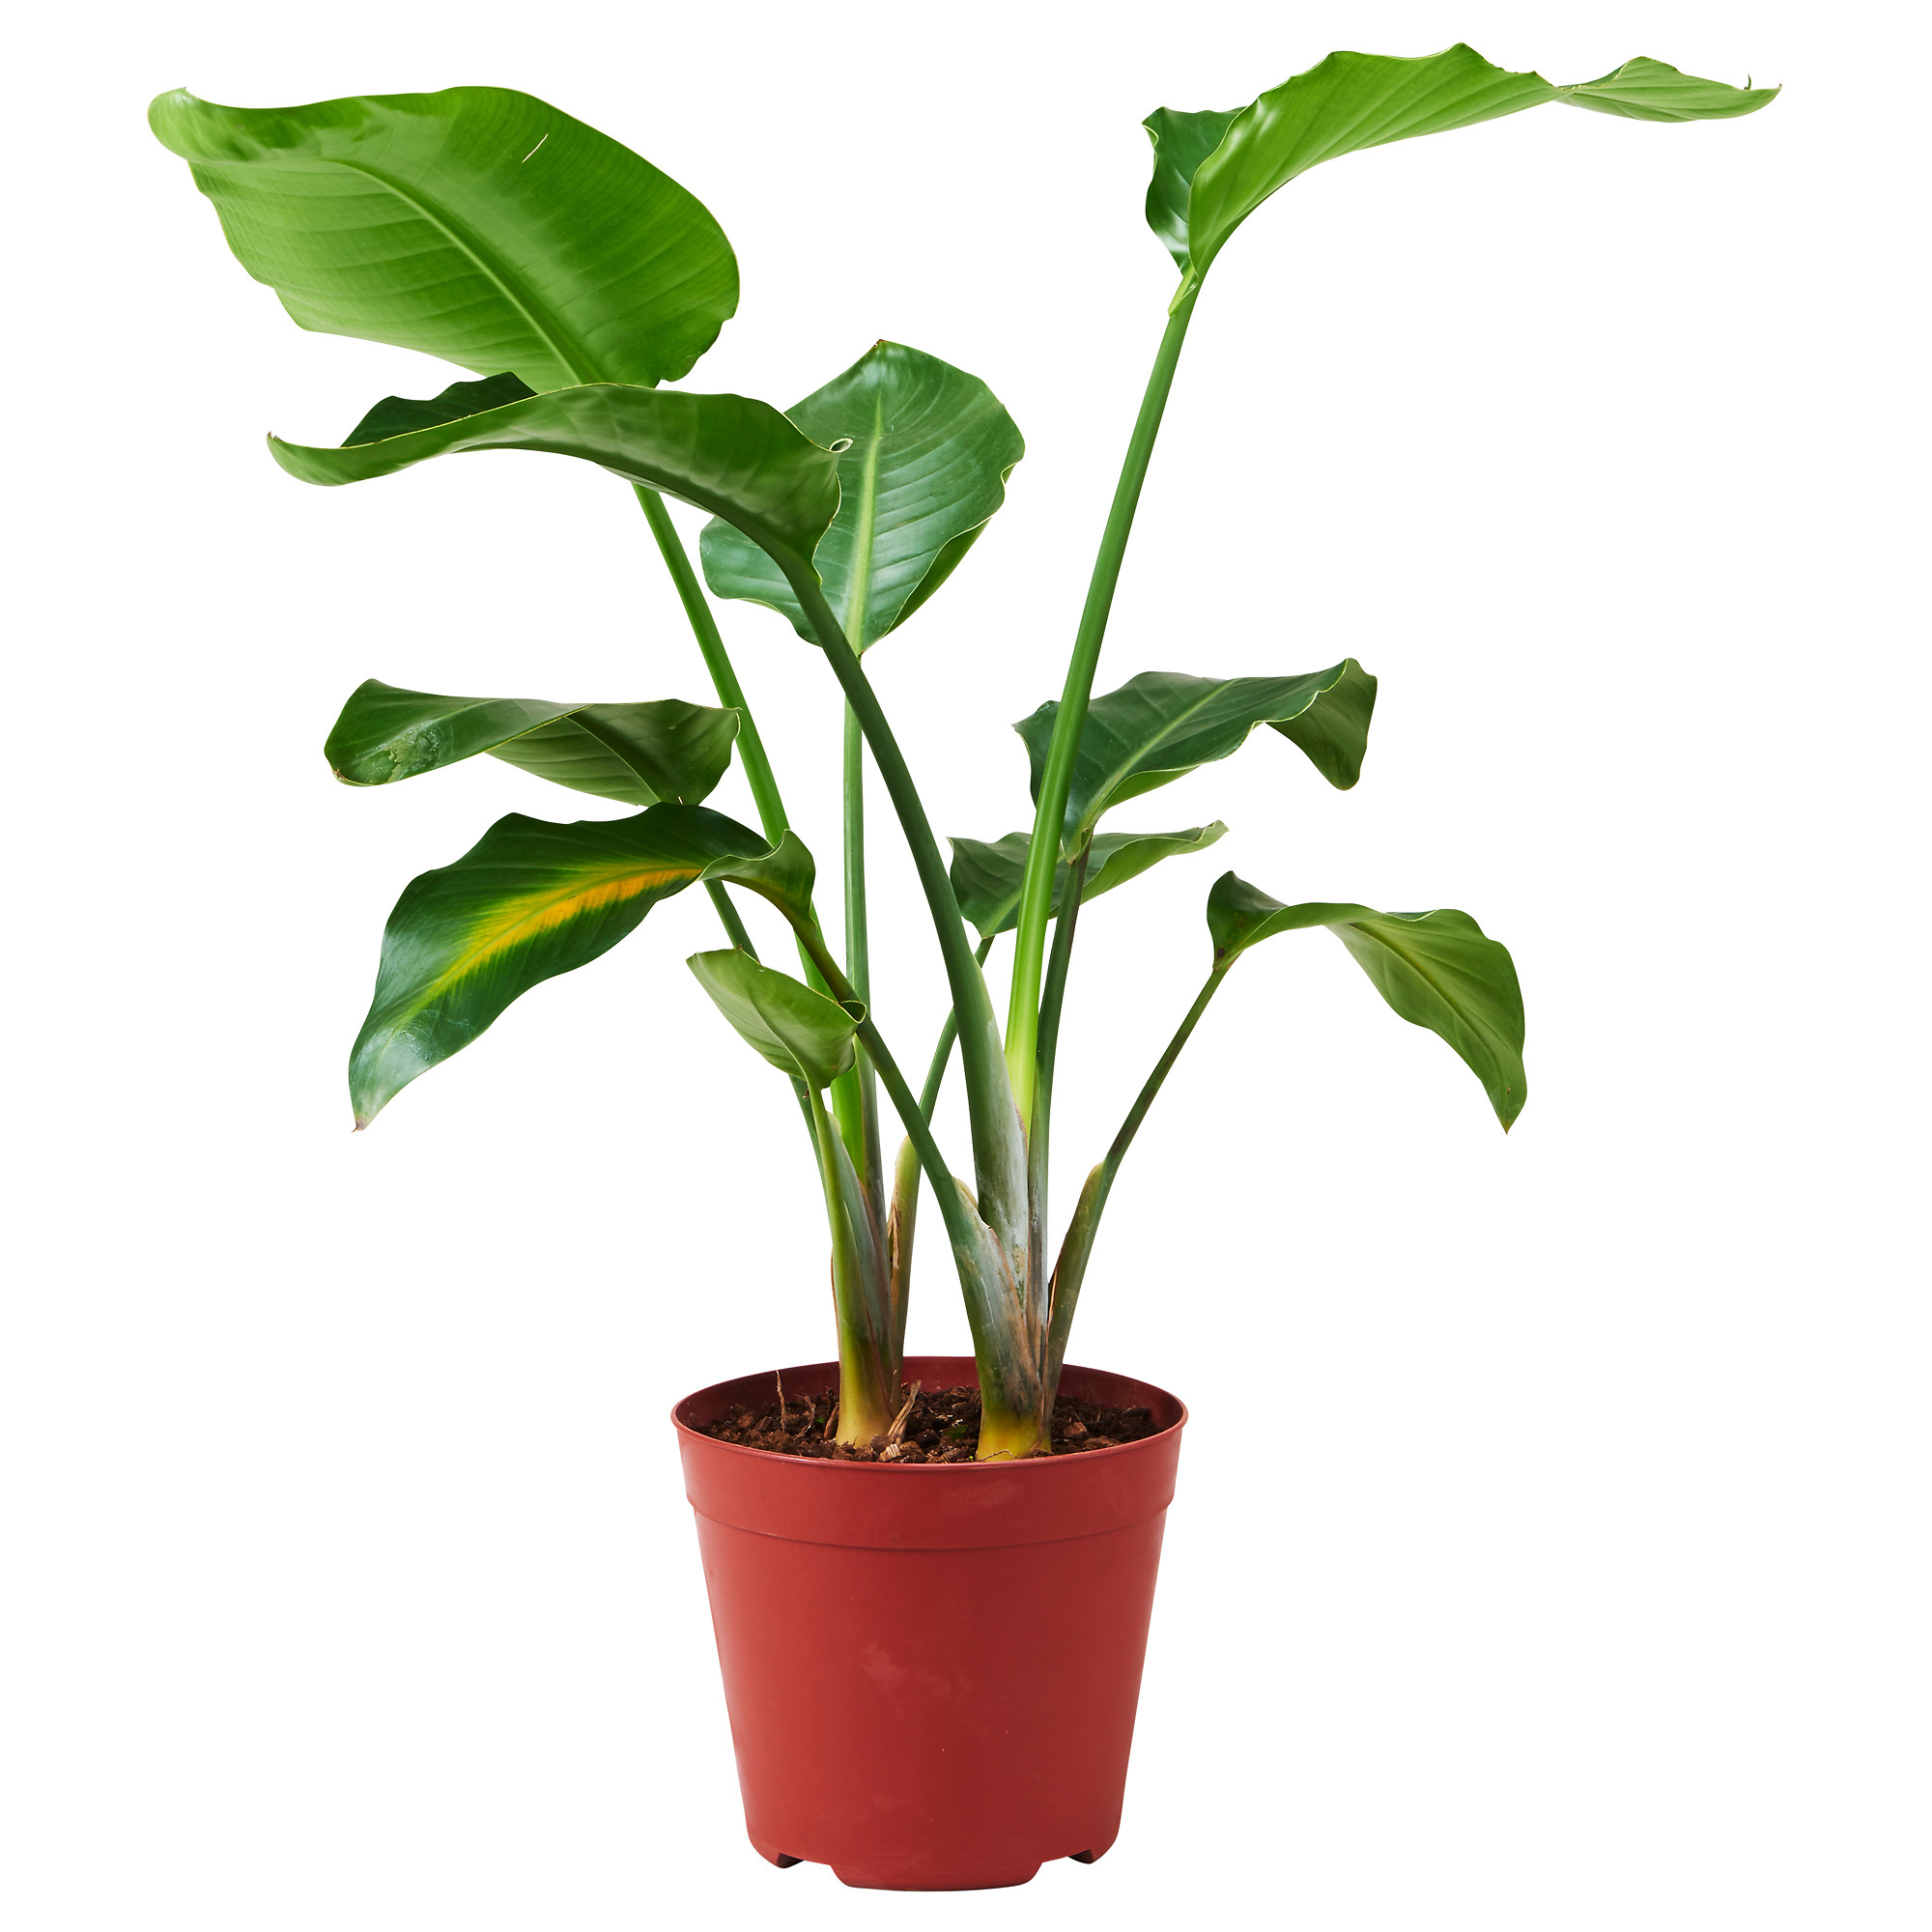 STRELITZIA potted plant